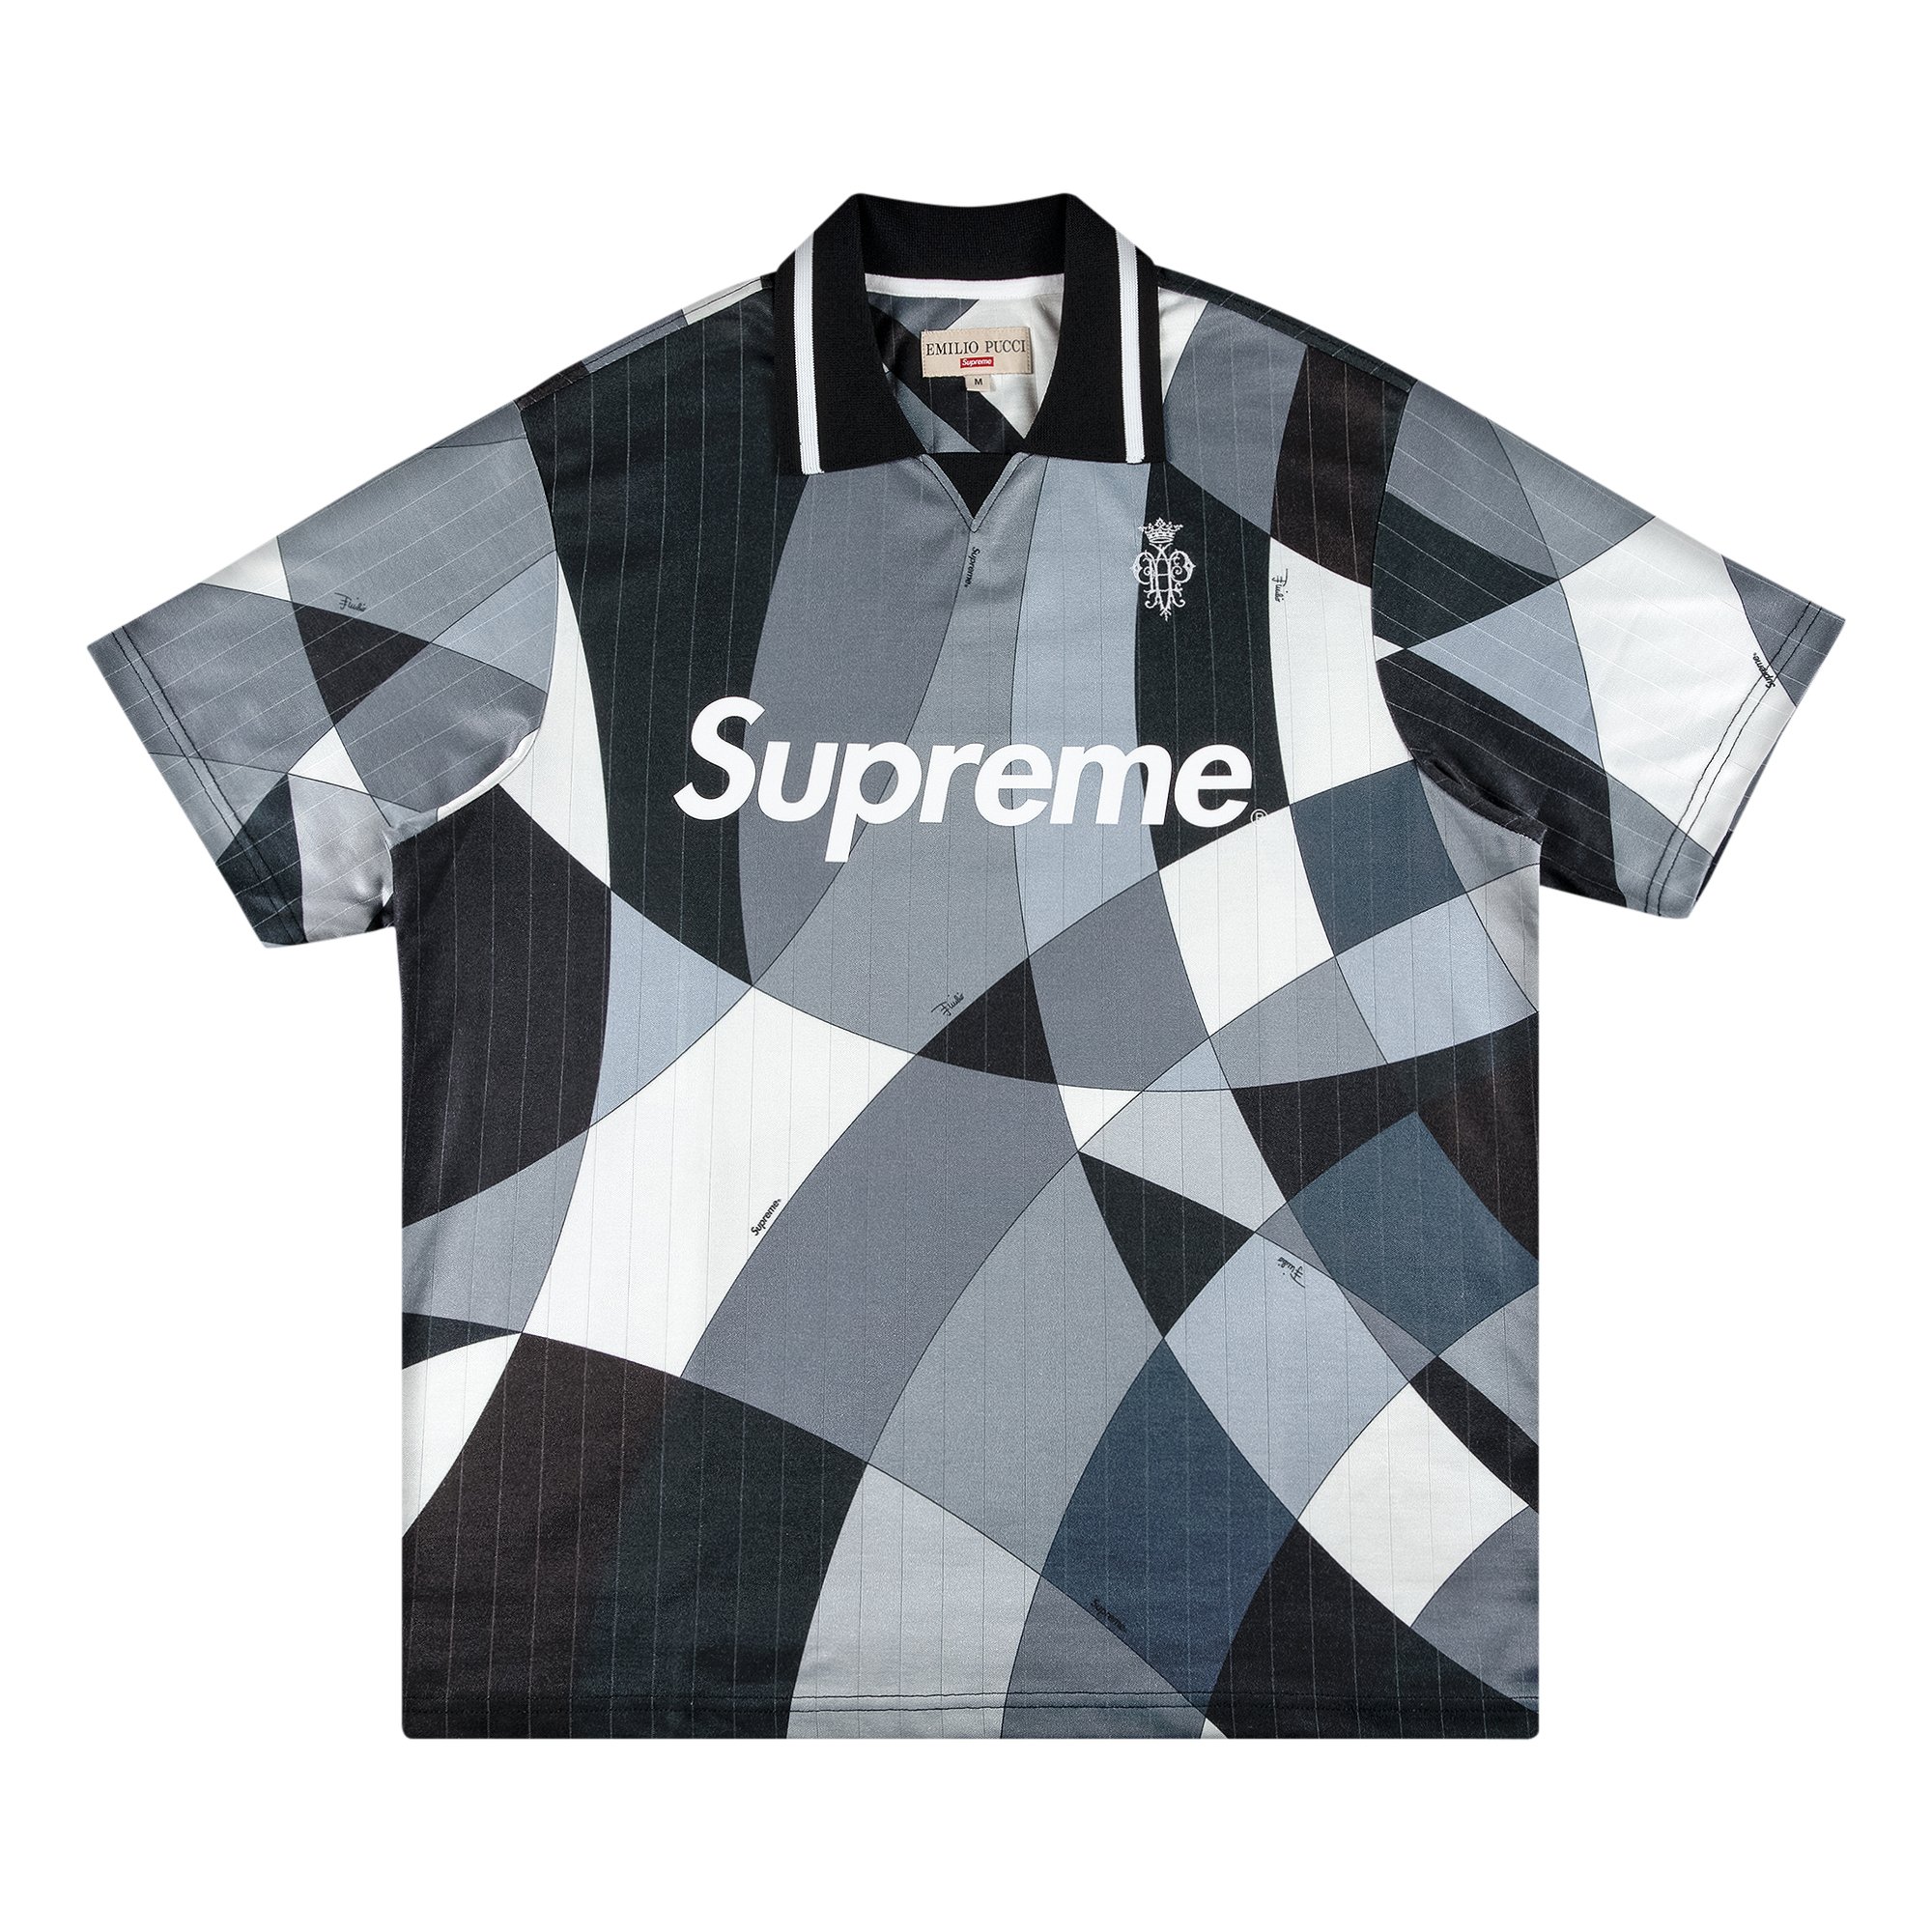 Buy Supreme x Emilio Pucci Soccer Jersey 'Black' - SS21KN24 BLACK